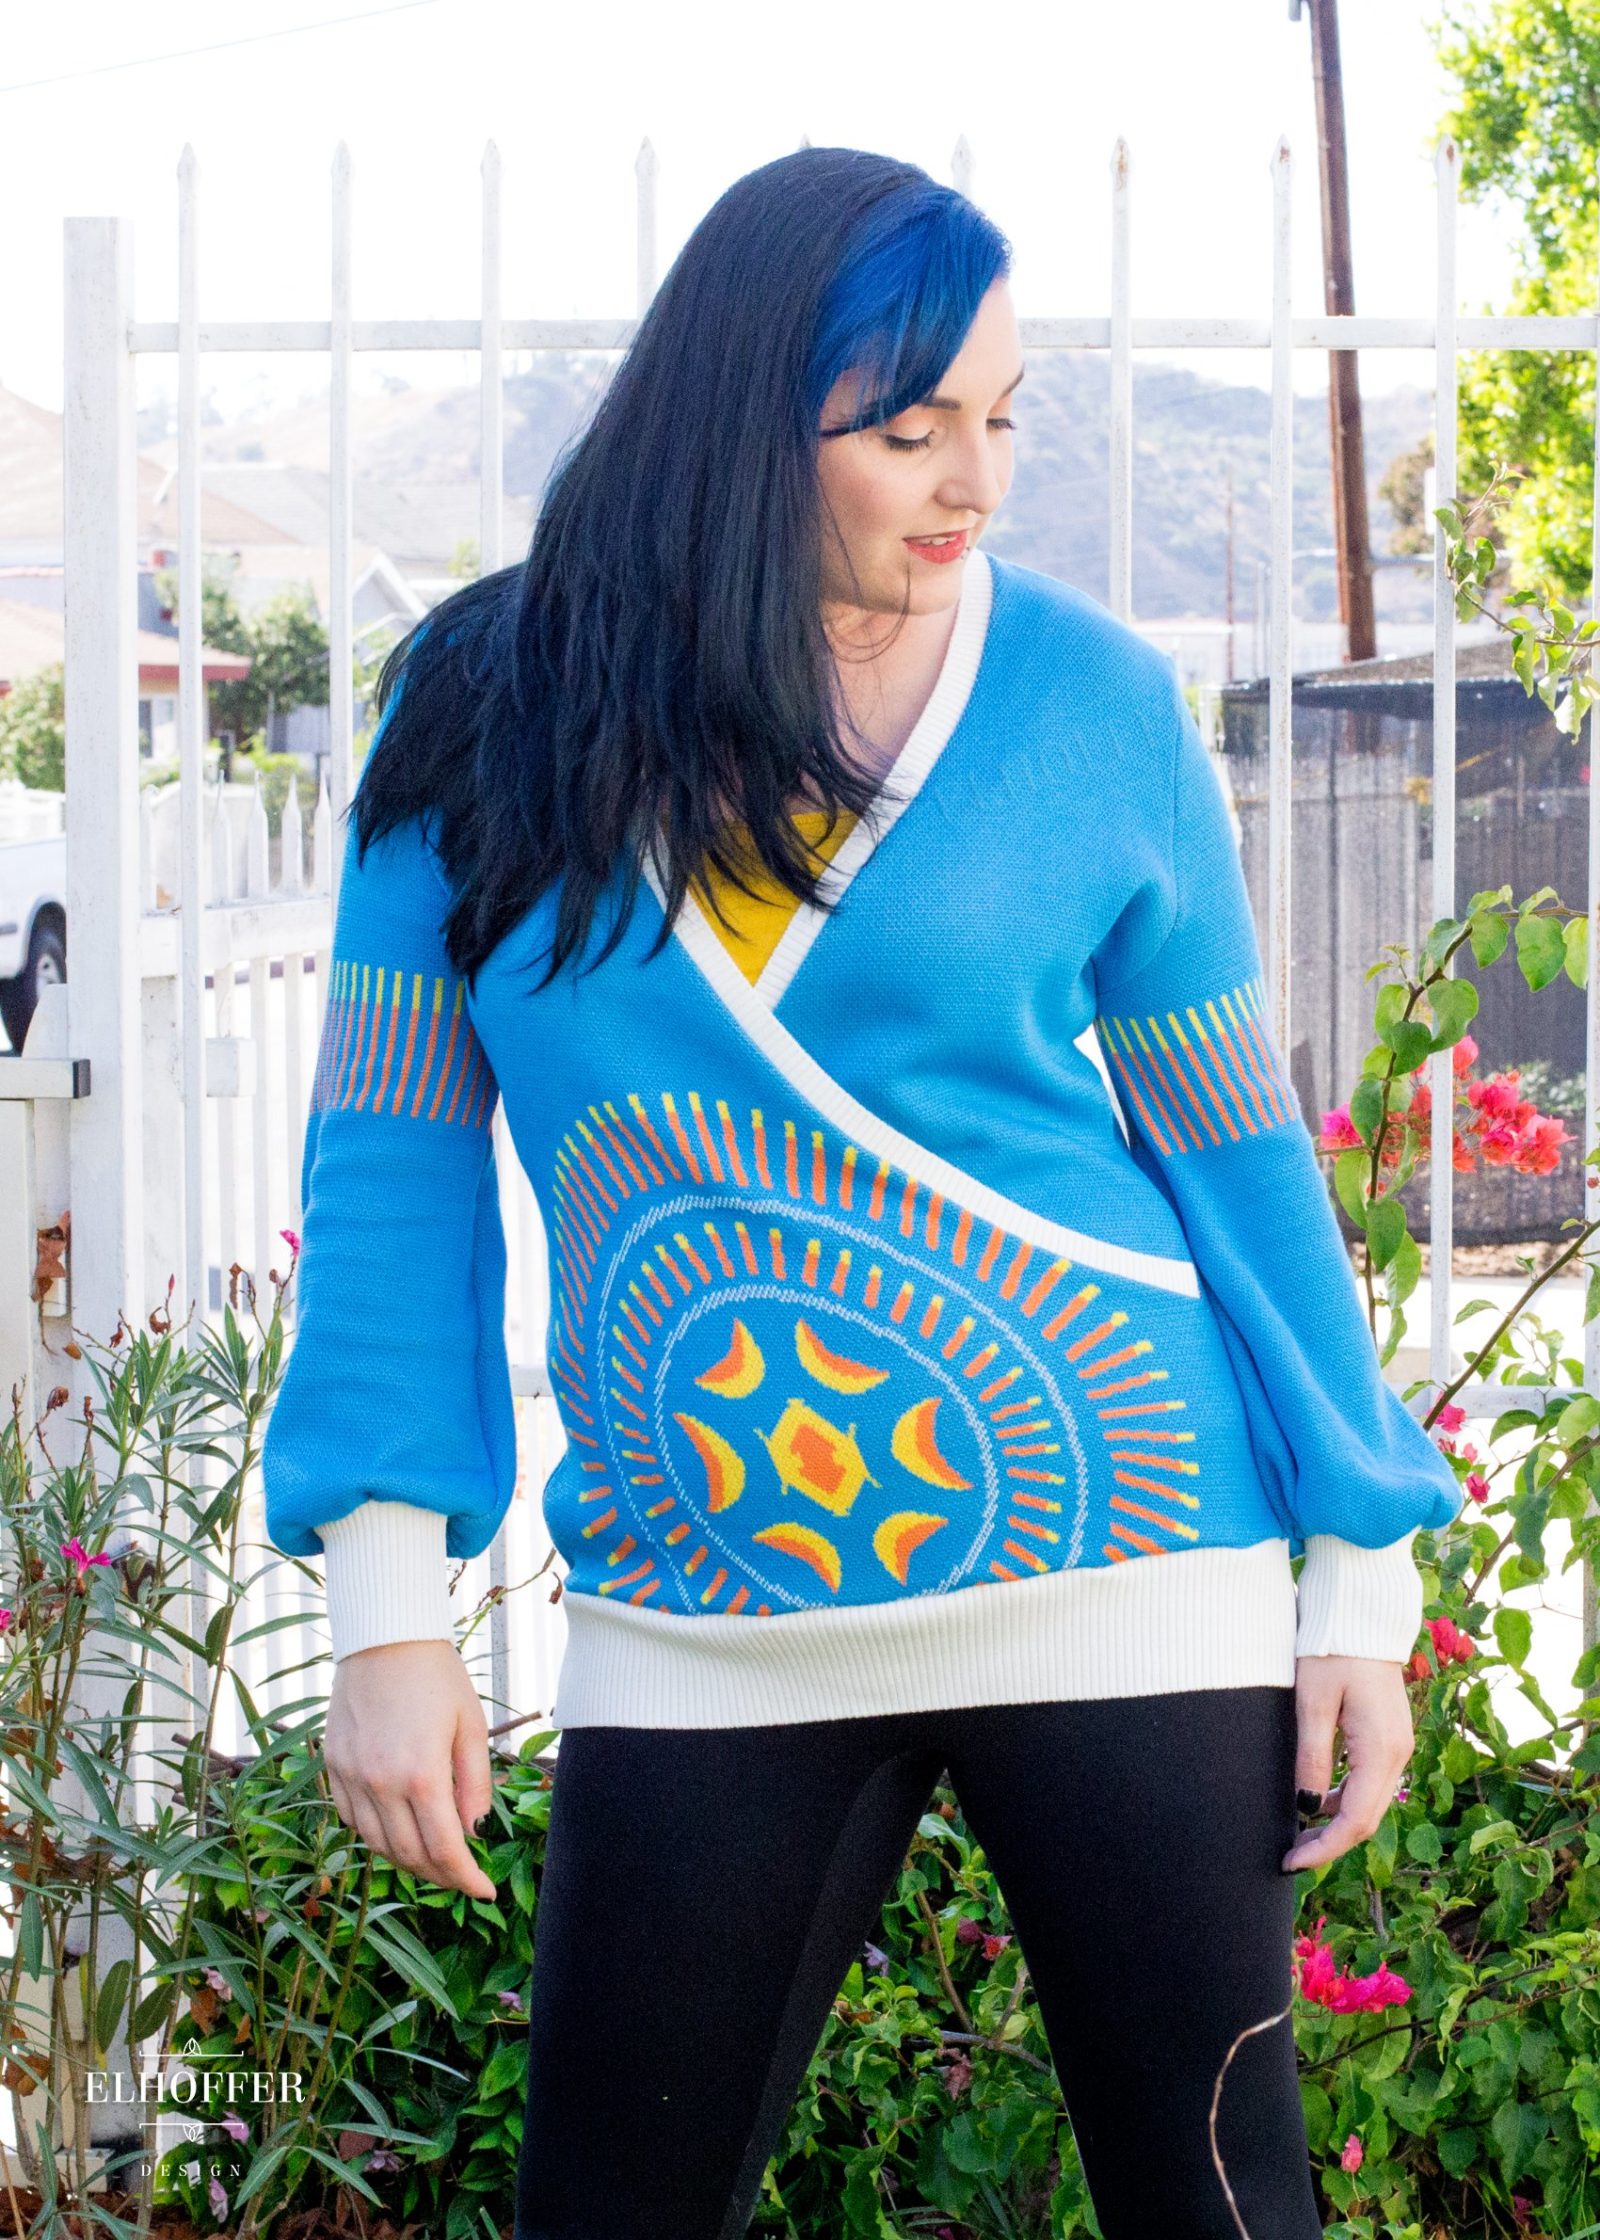 Elhoffer Design - Padme' Amidala Inspired Galactic Eclipse Cross Front Sweater